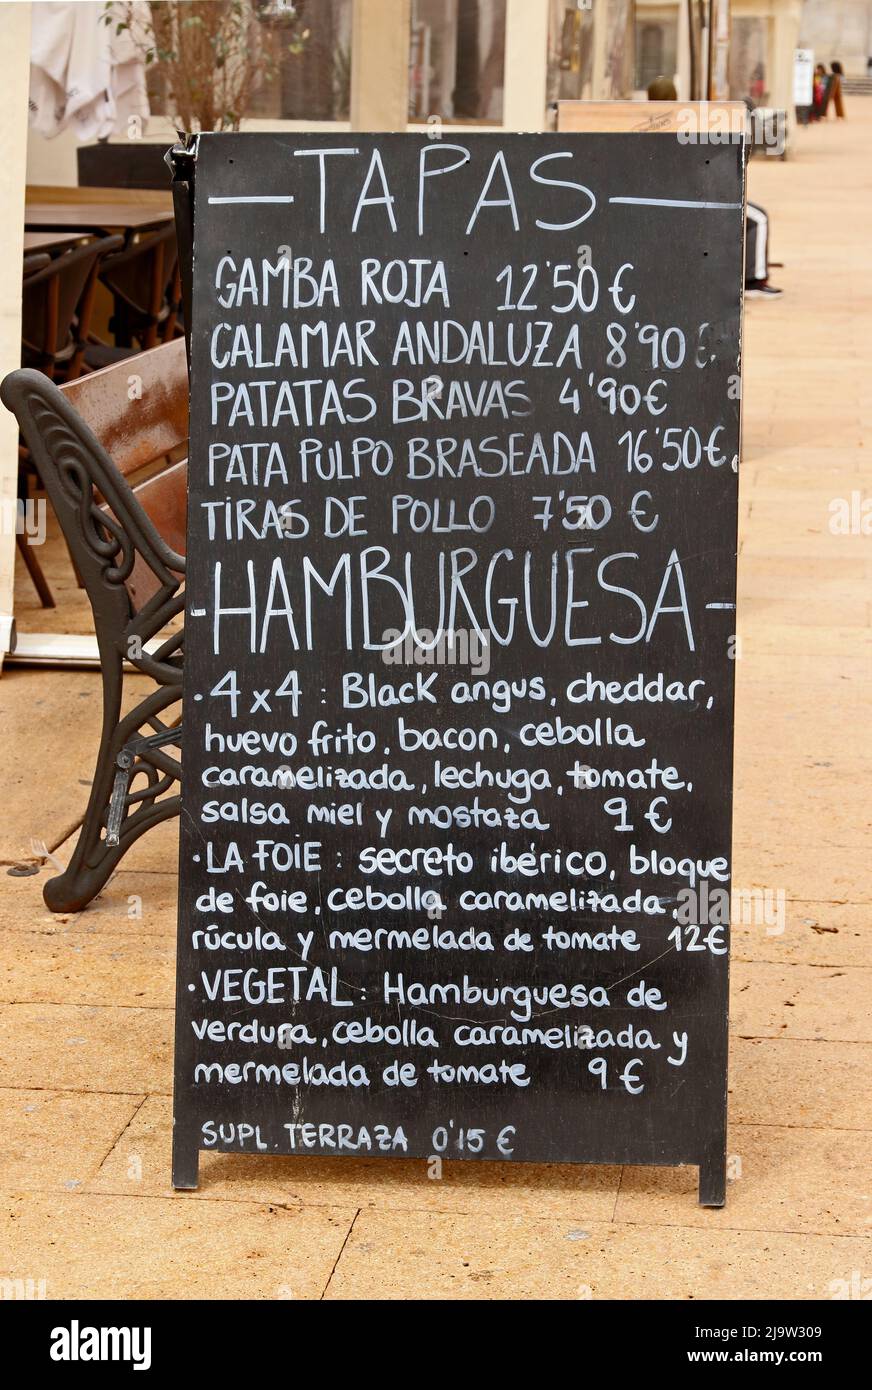 Blackboard advertising Tapas and Hamburgues (burgers) outside restaurant, Tarragona Stock Photo